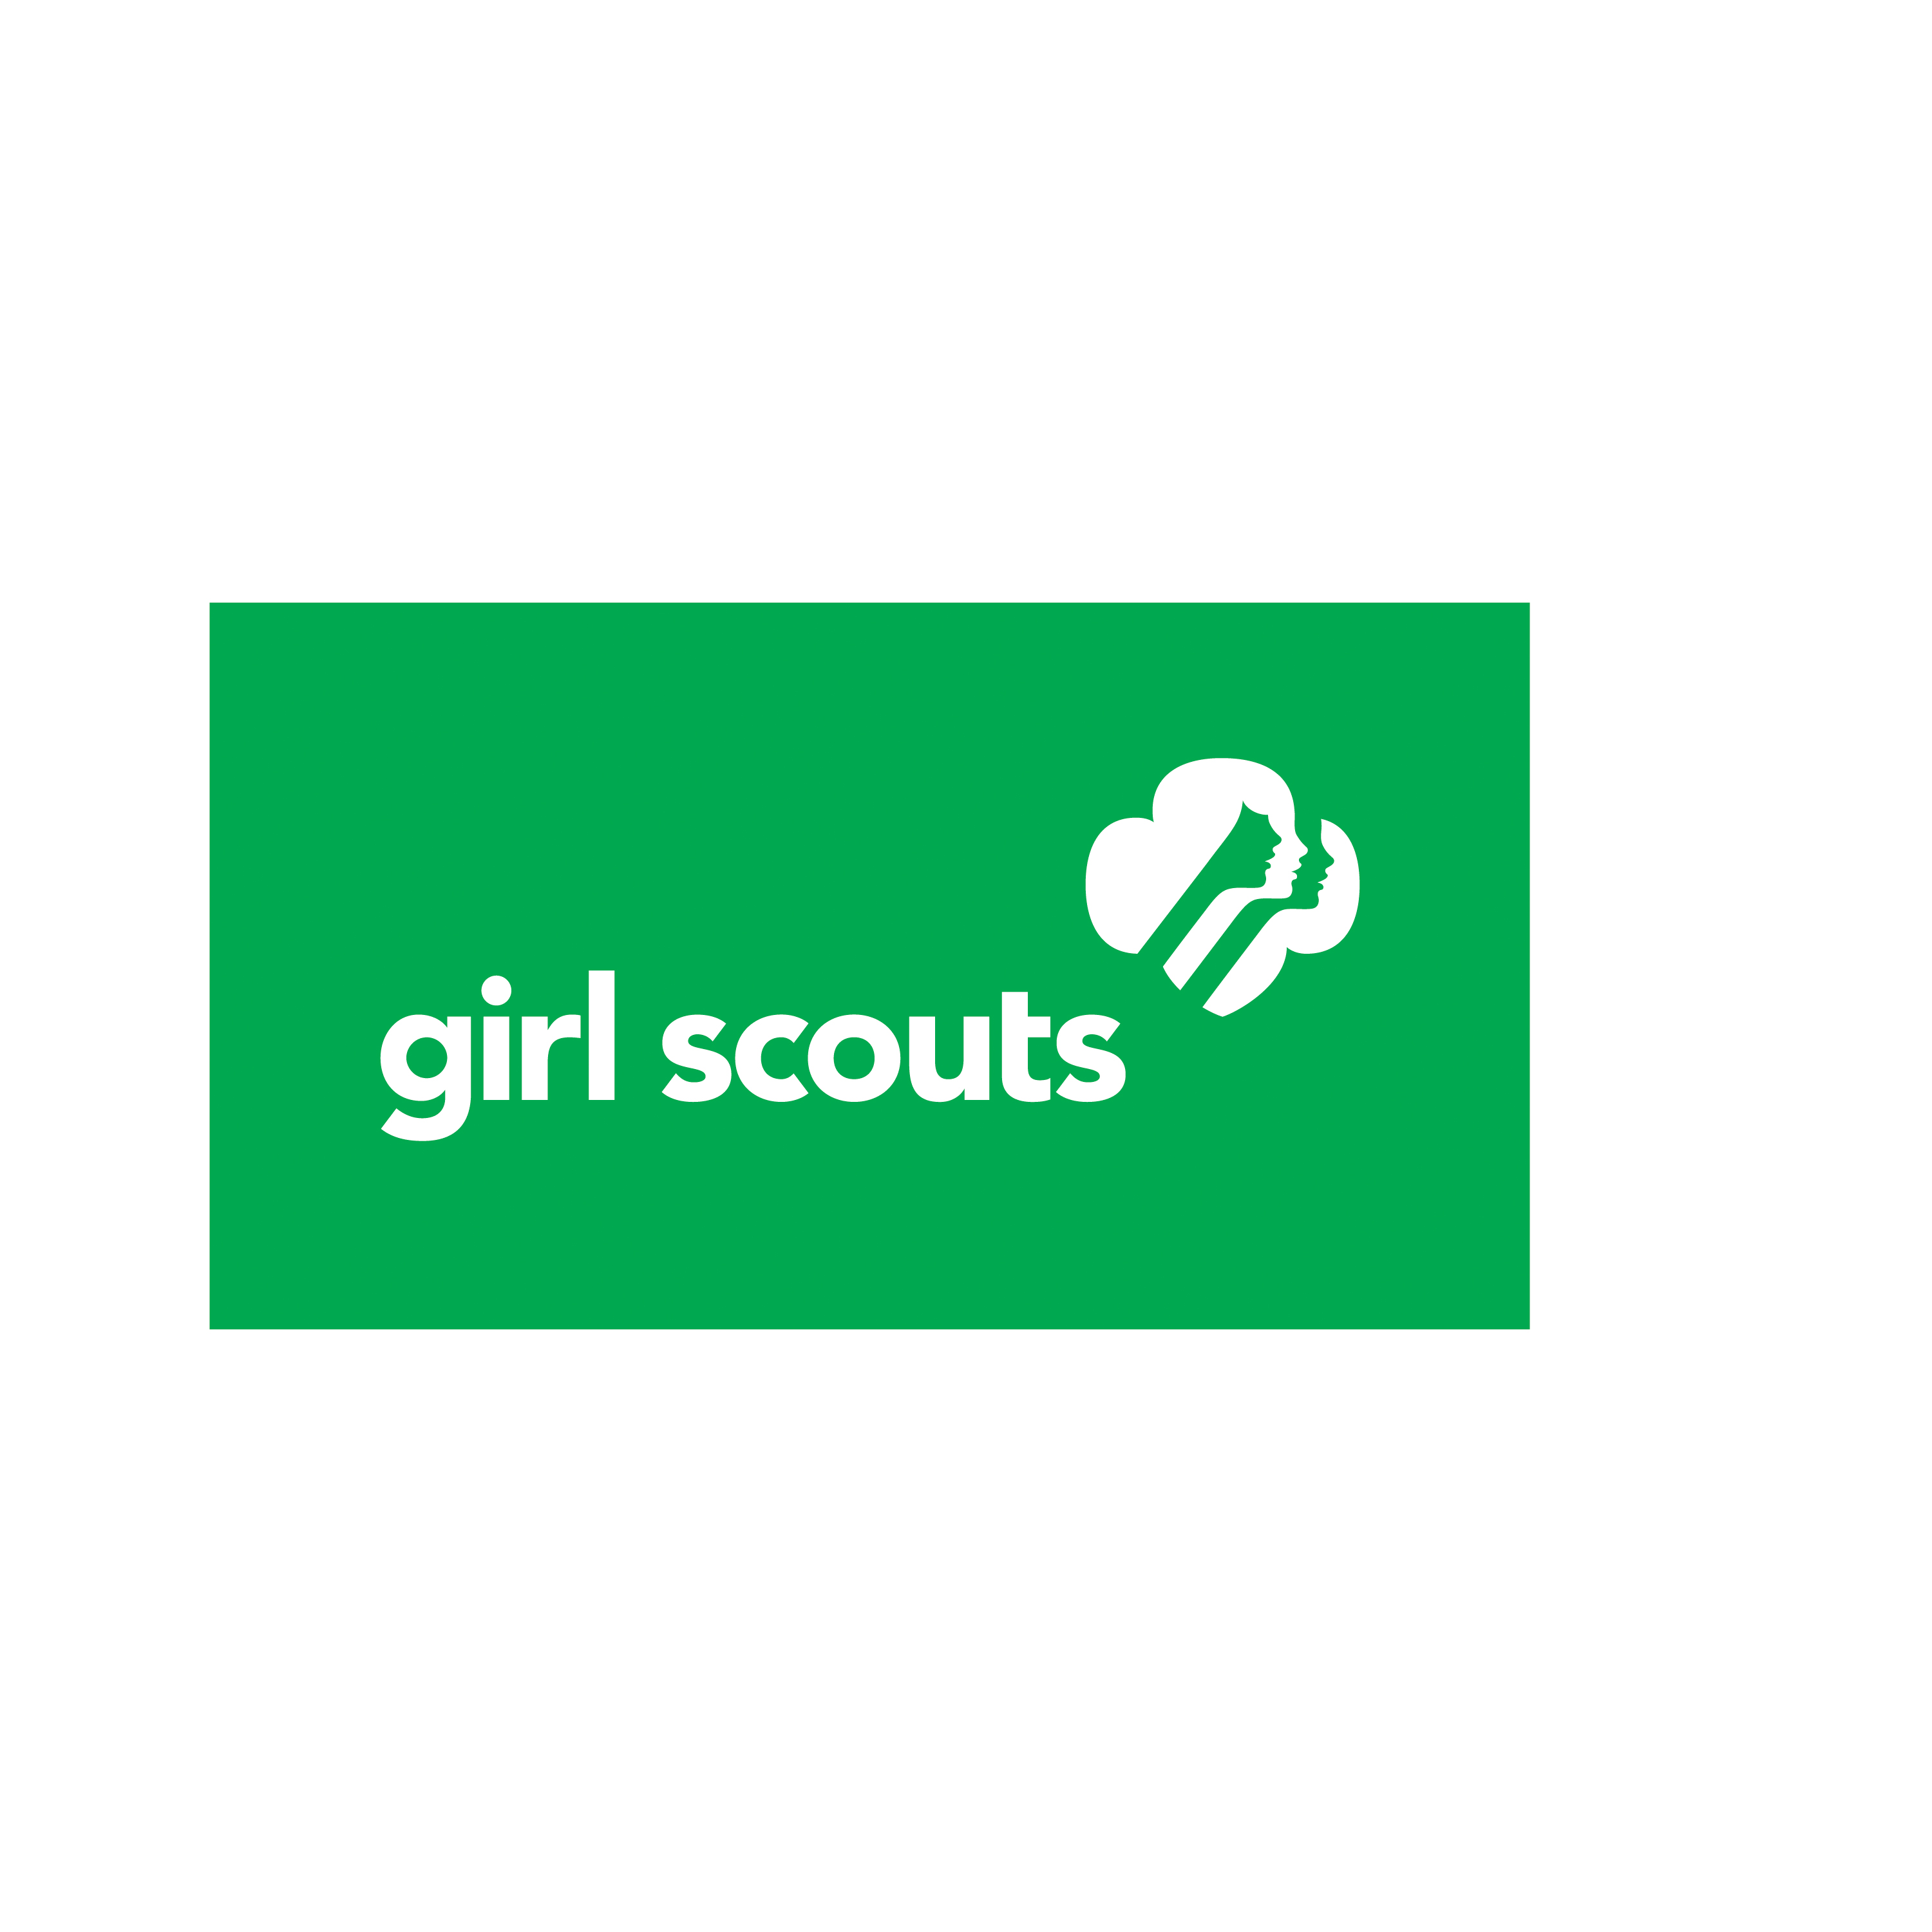 Branding Guidelines - Girl Scouts of Western Washington